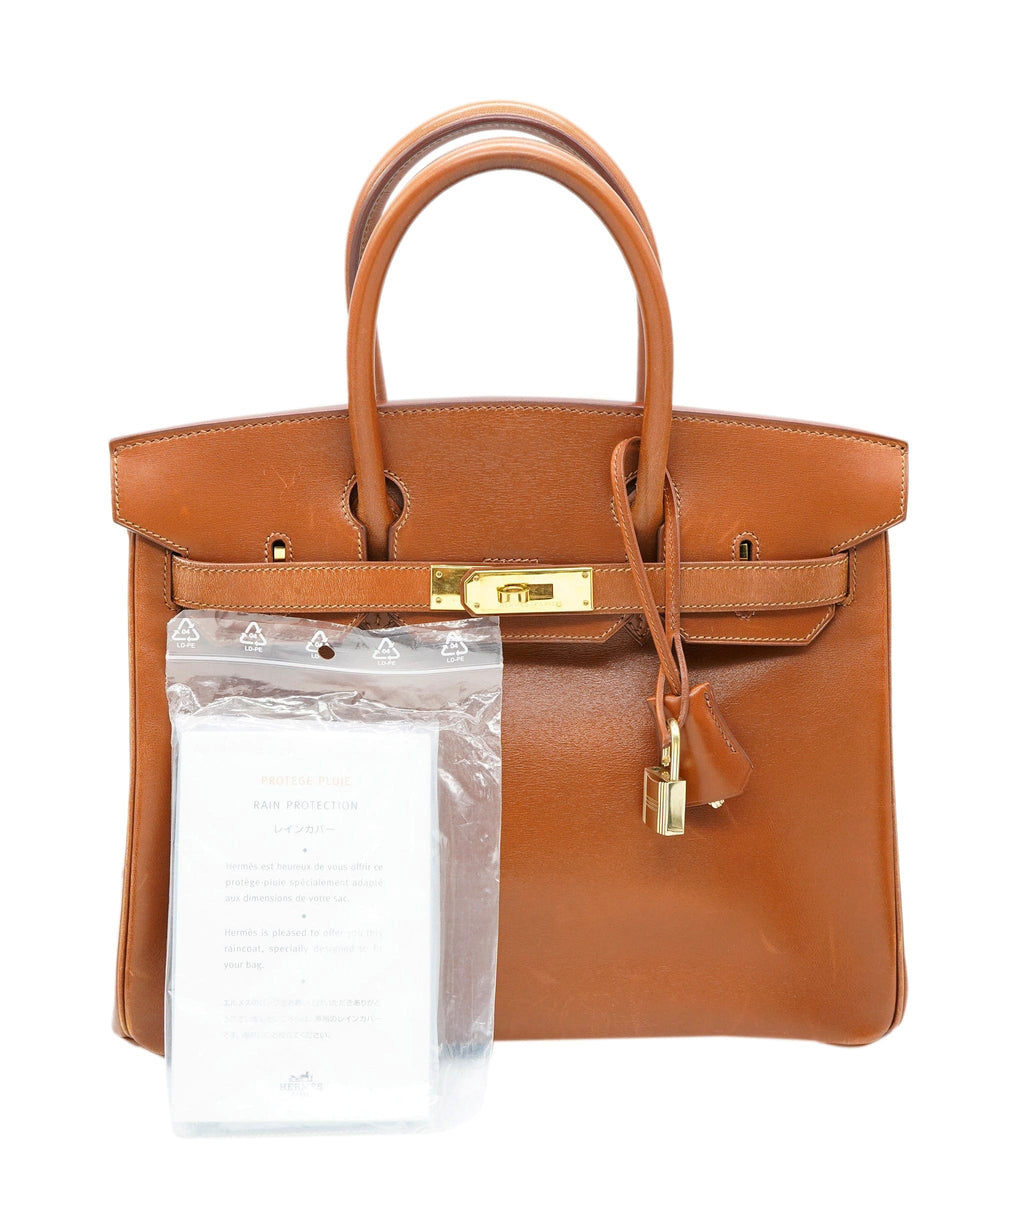 Buy Hermes Orange Box Hermes Bag Box Hermes Birkin Bag Hermes